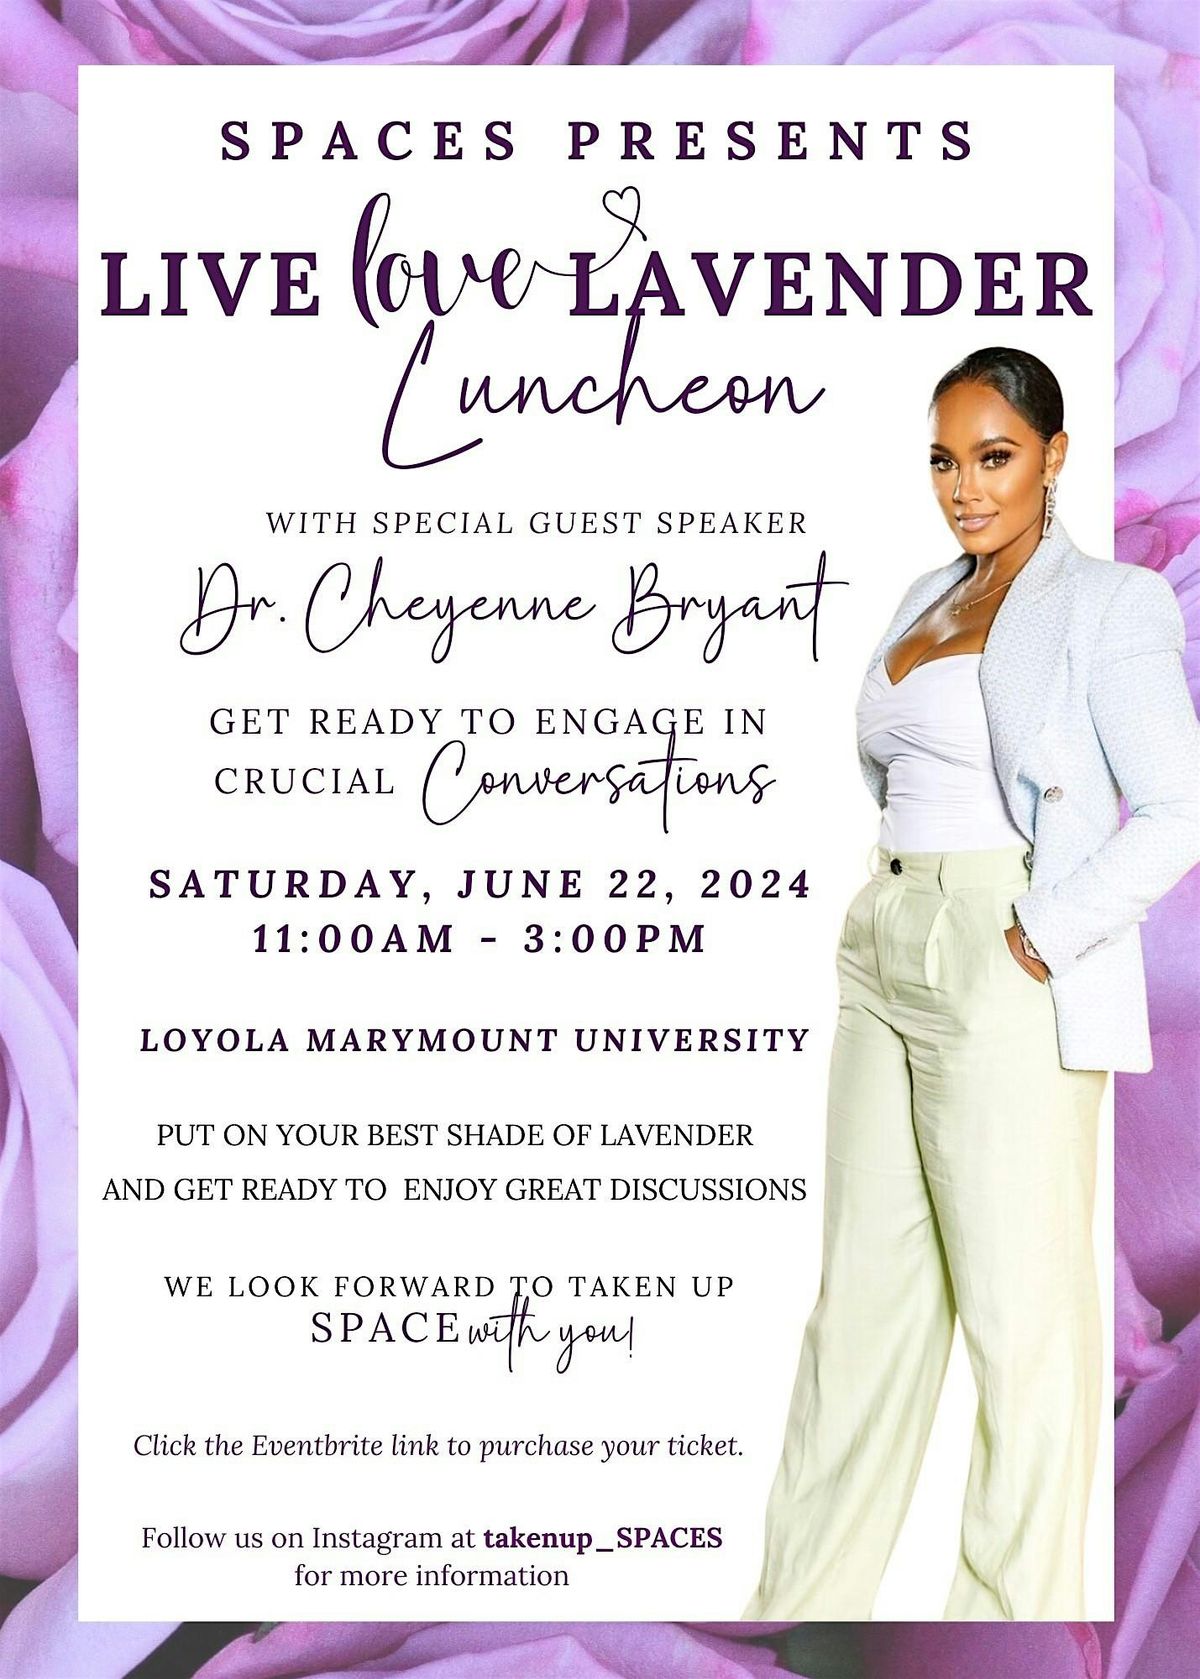 Live, Love, Lavender Luncheon